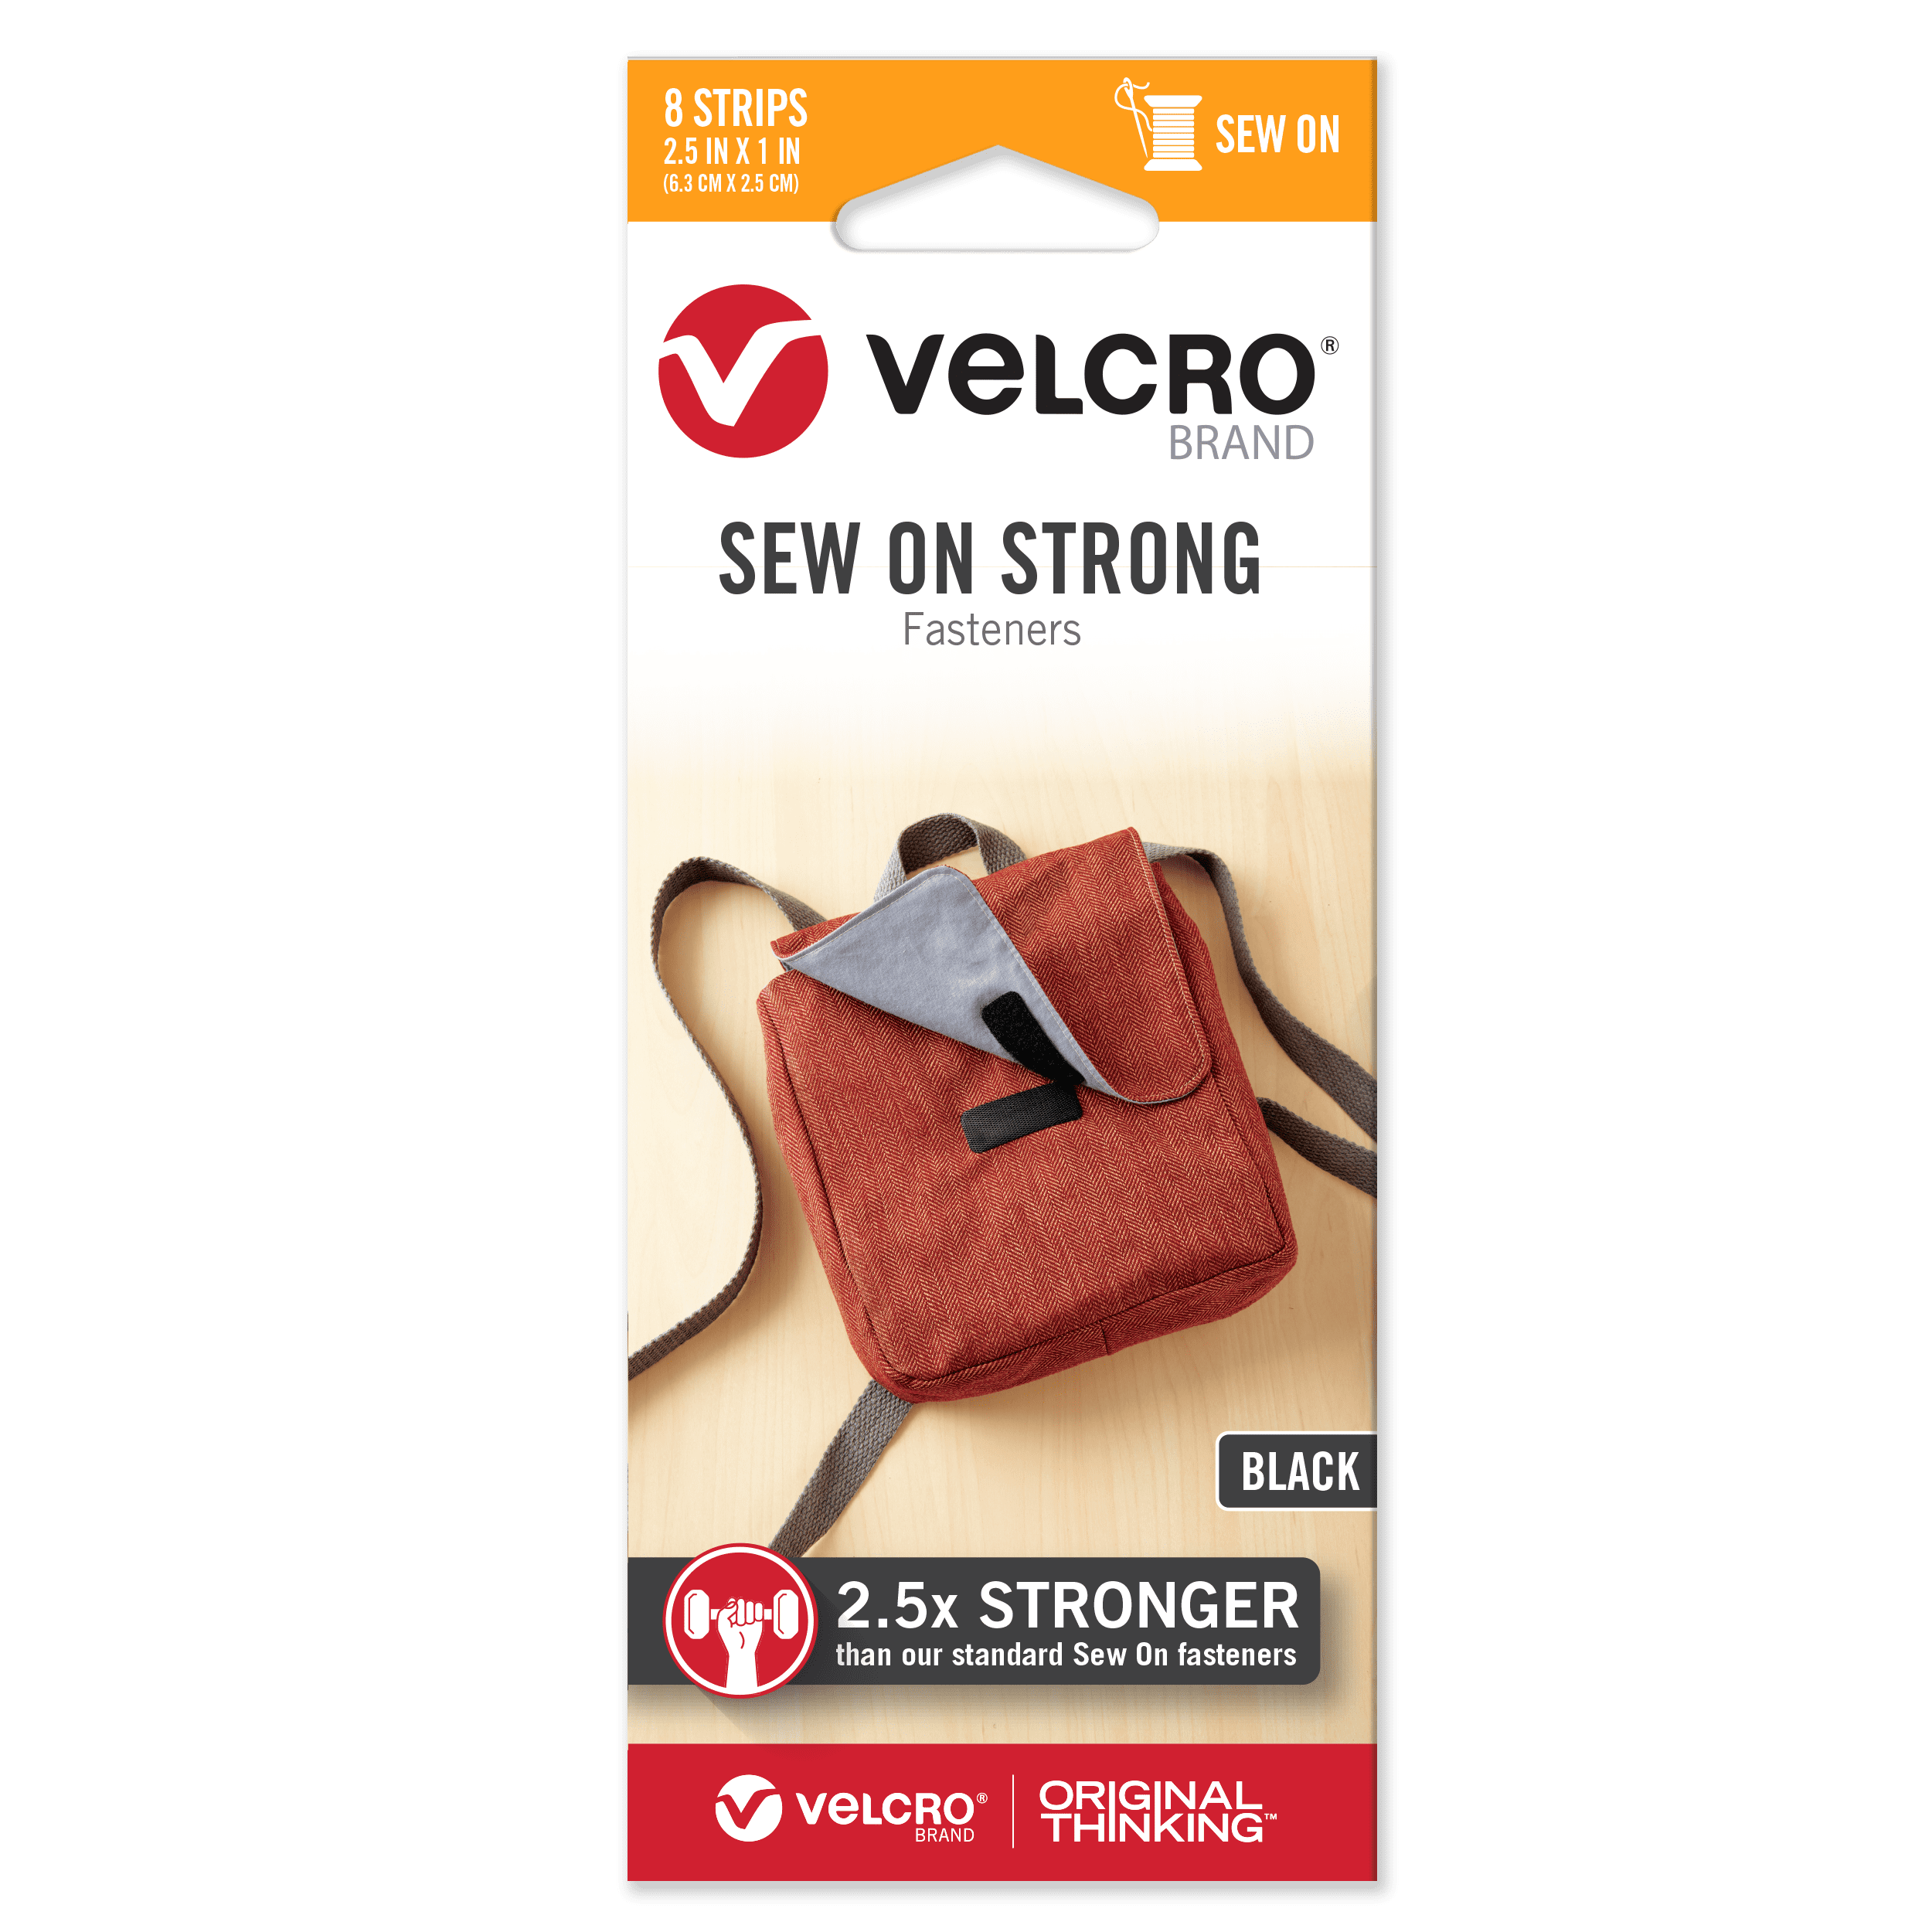 VELCRO® Brand Sew On Snag Free Fasteners